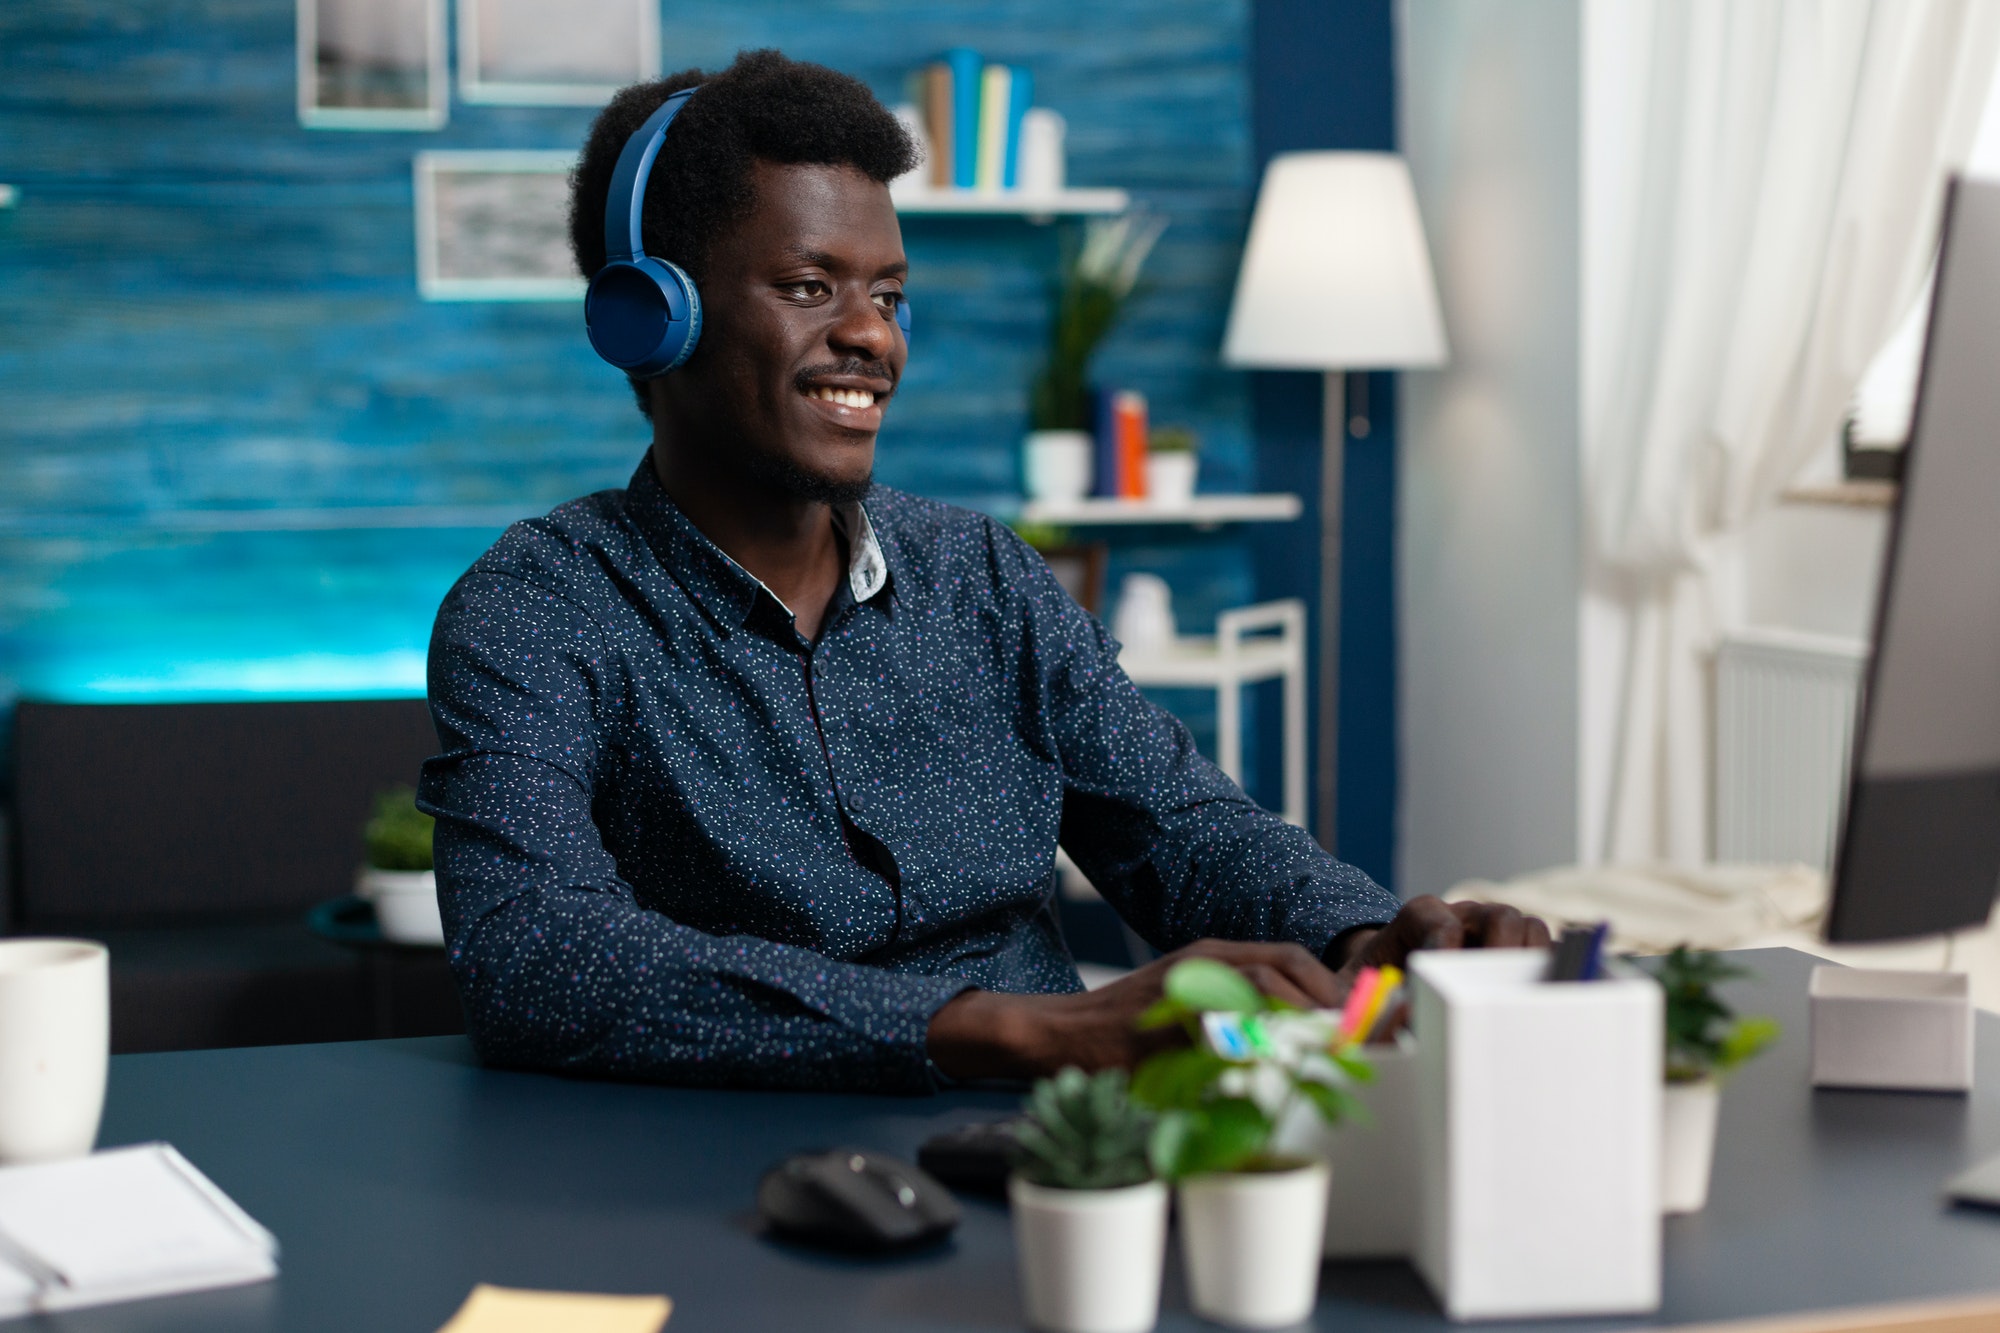 Smiling student wearing headphone listening music